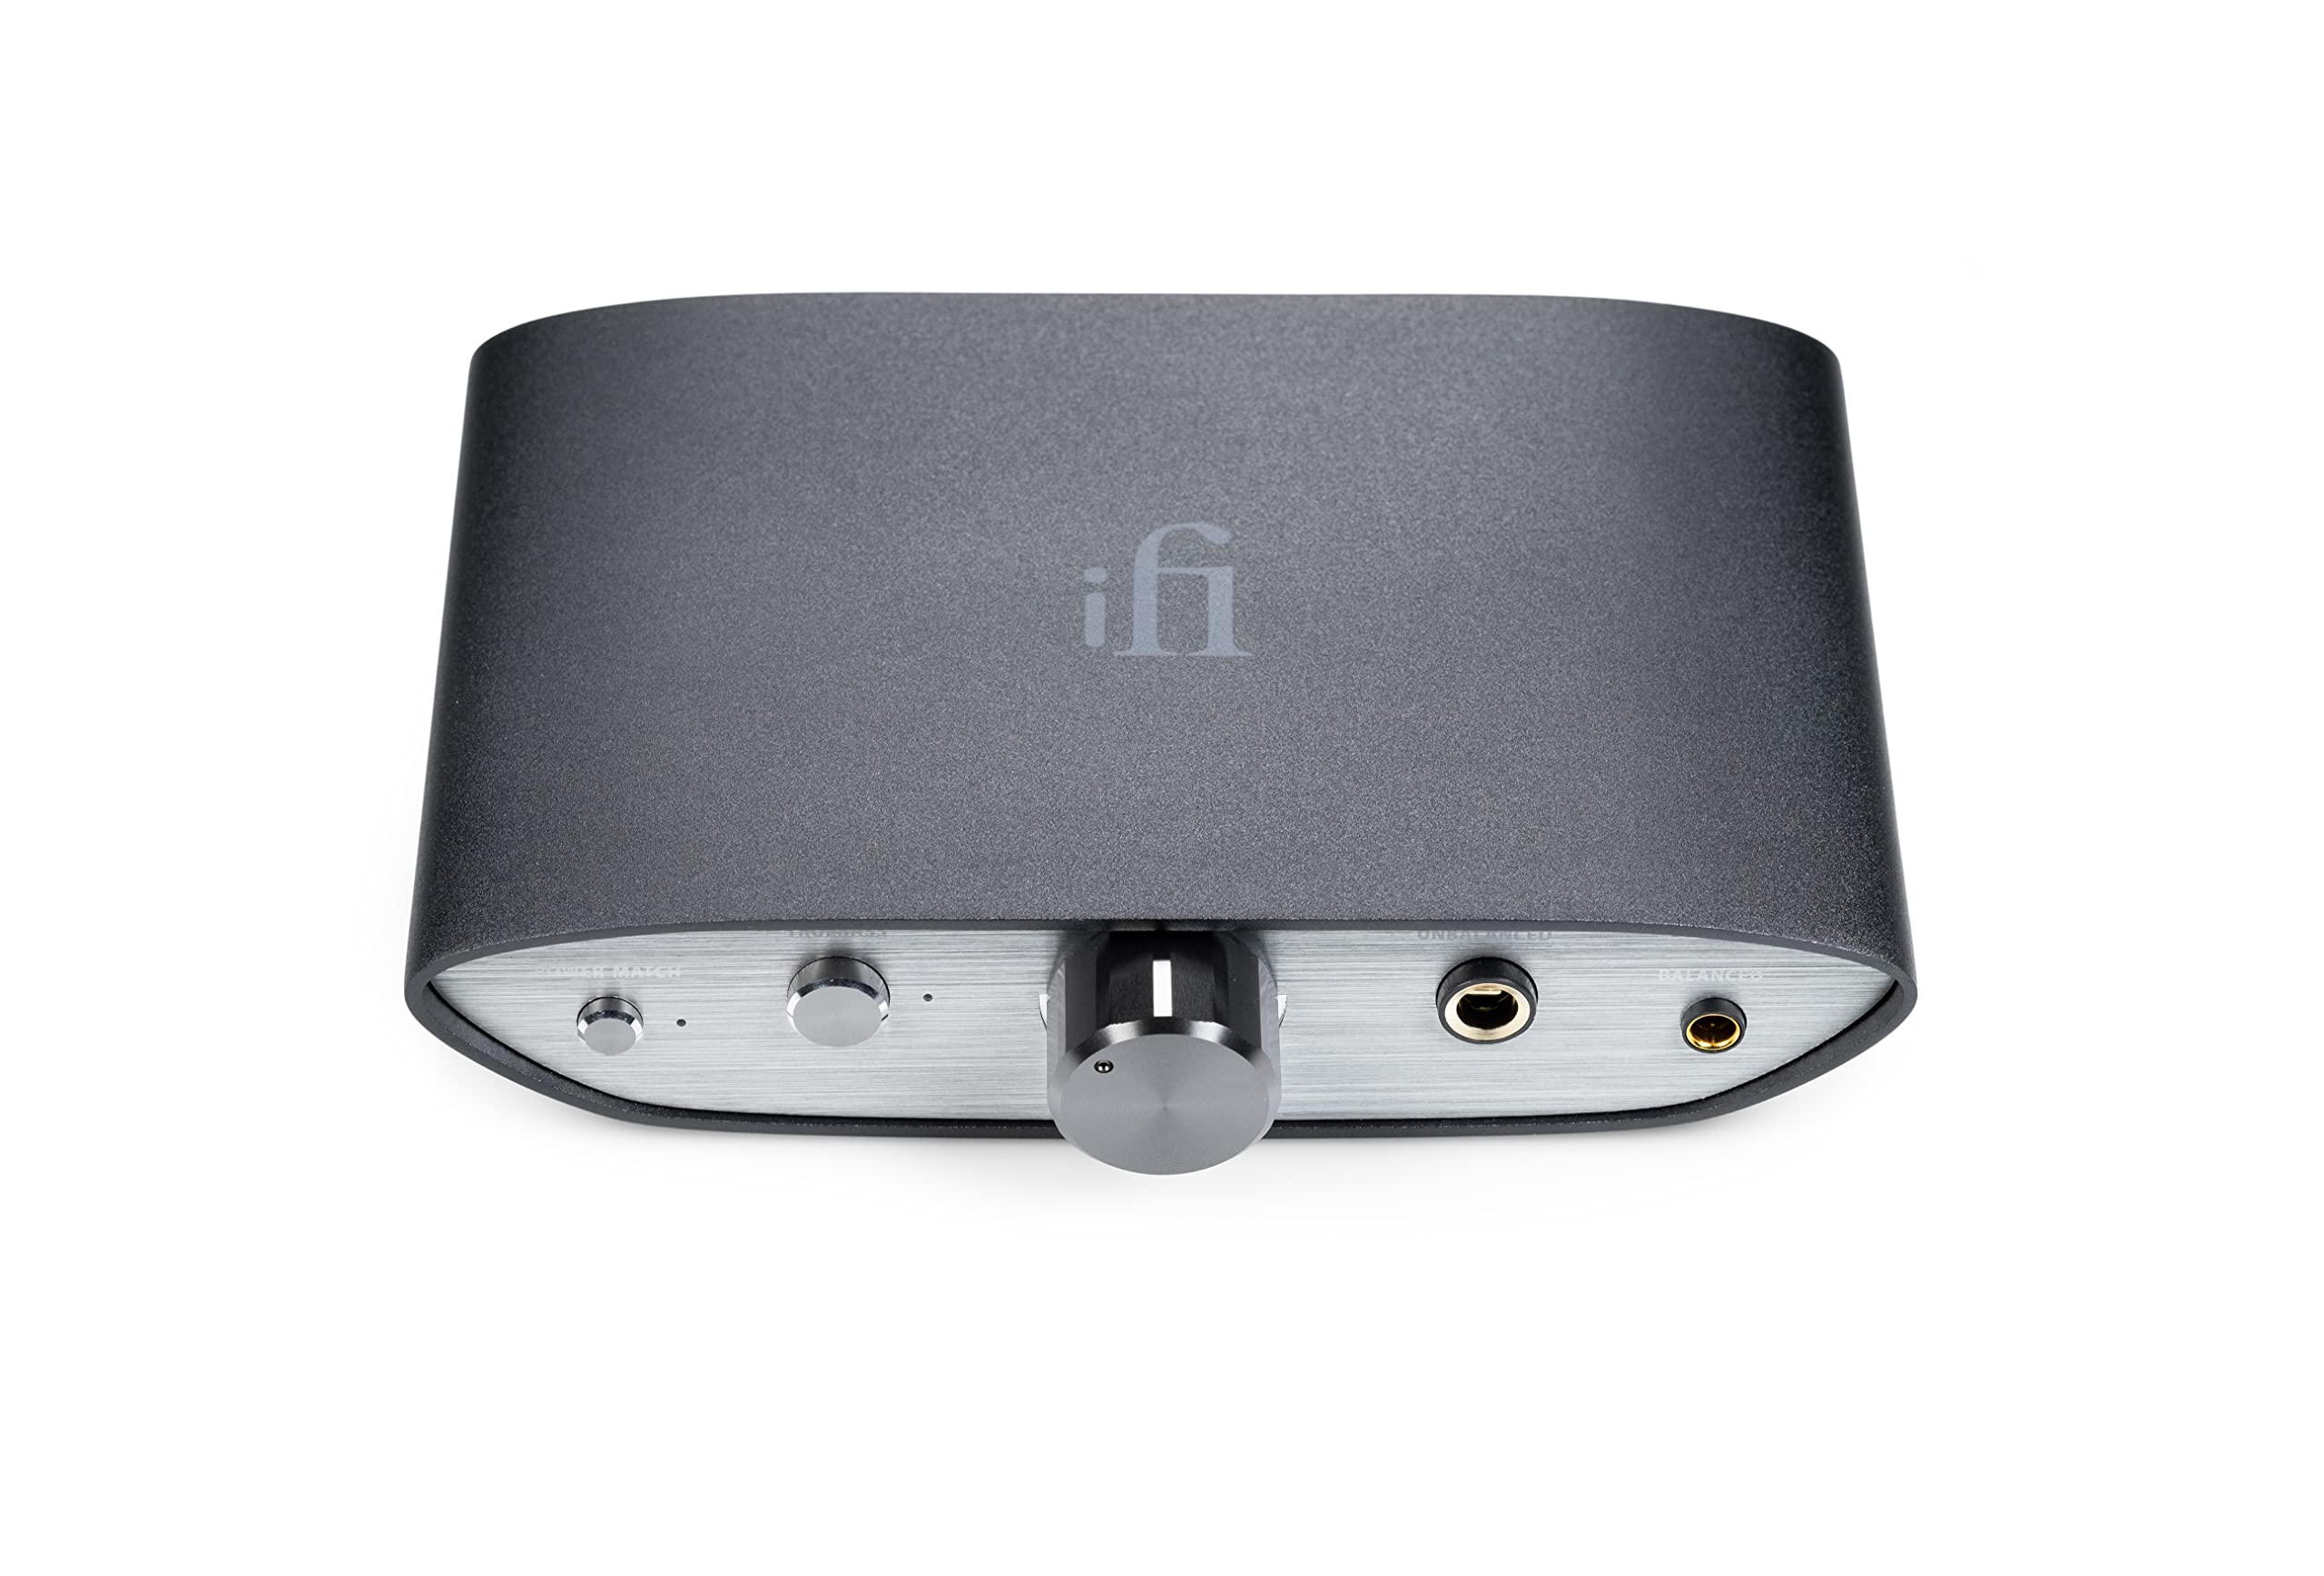 iFi Zen DAC V2 | Desktop Digital Analog Converter with USB 3.0 B Input only/Outputs: 6.3mm Unbalanced / 4.4mm Balanced/RCA - MQA DECODER - Audio System Upgrade (Unit only)